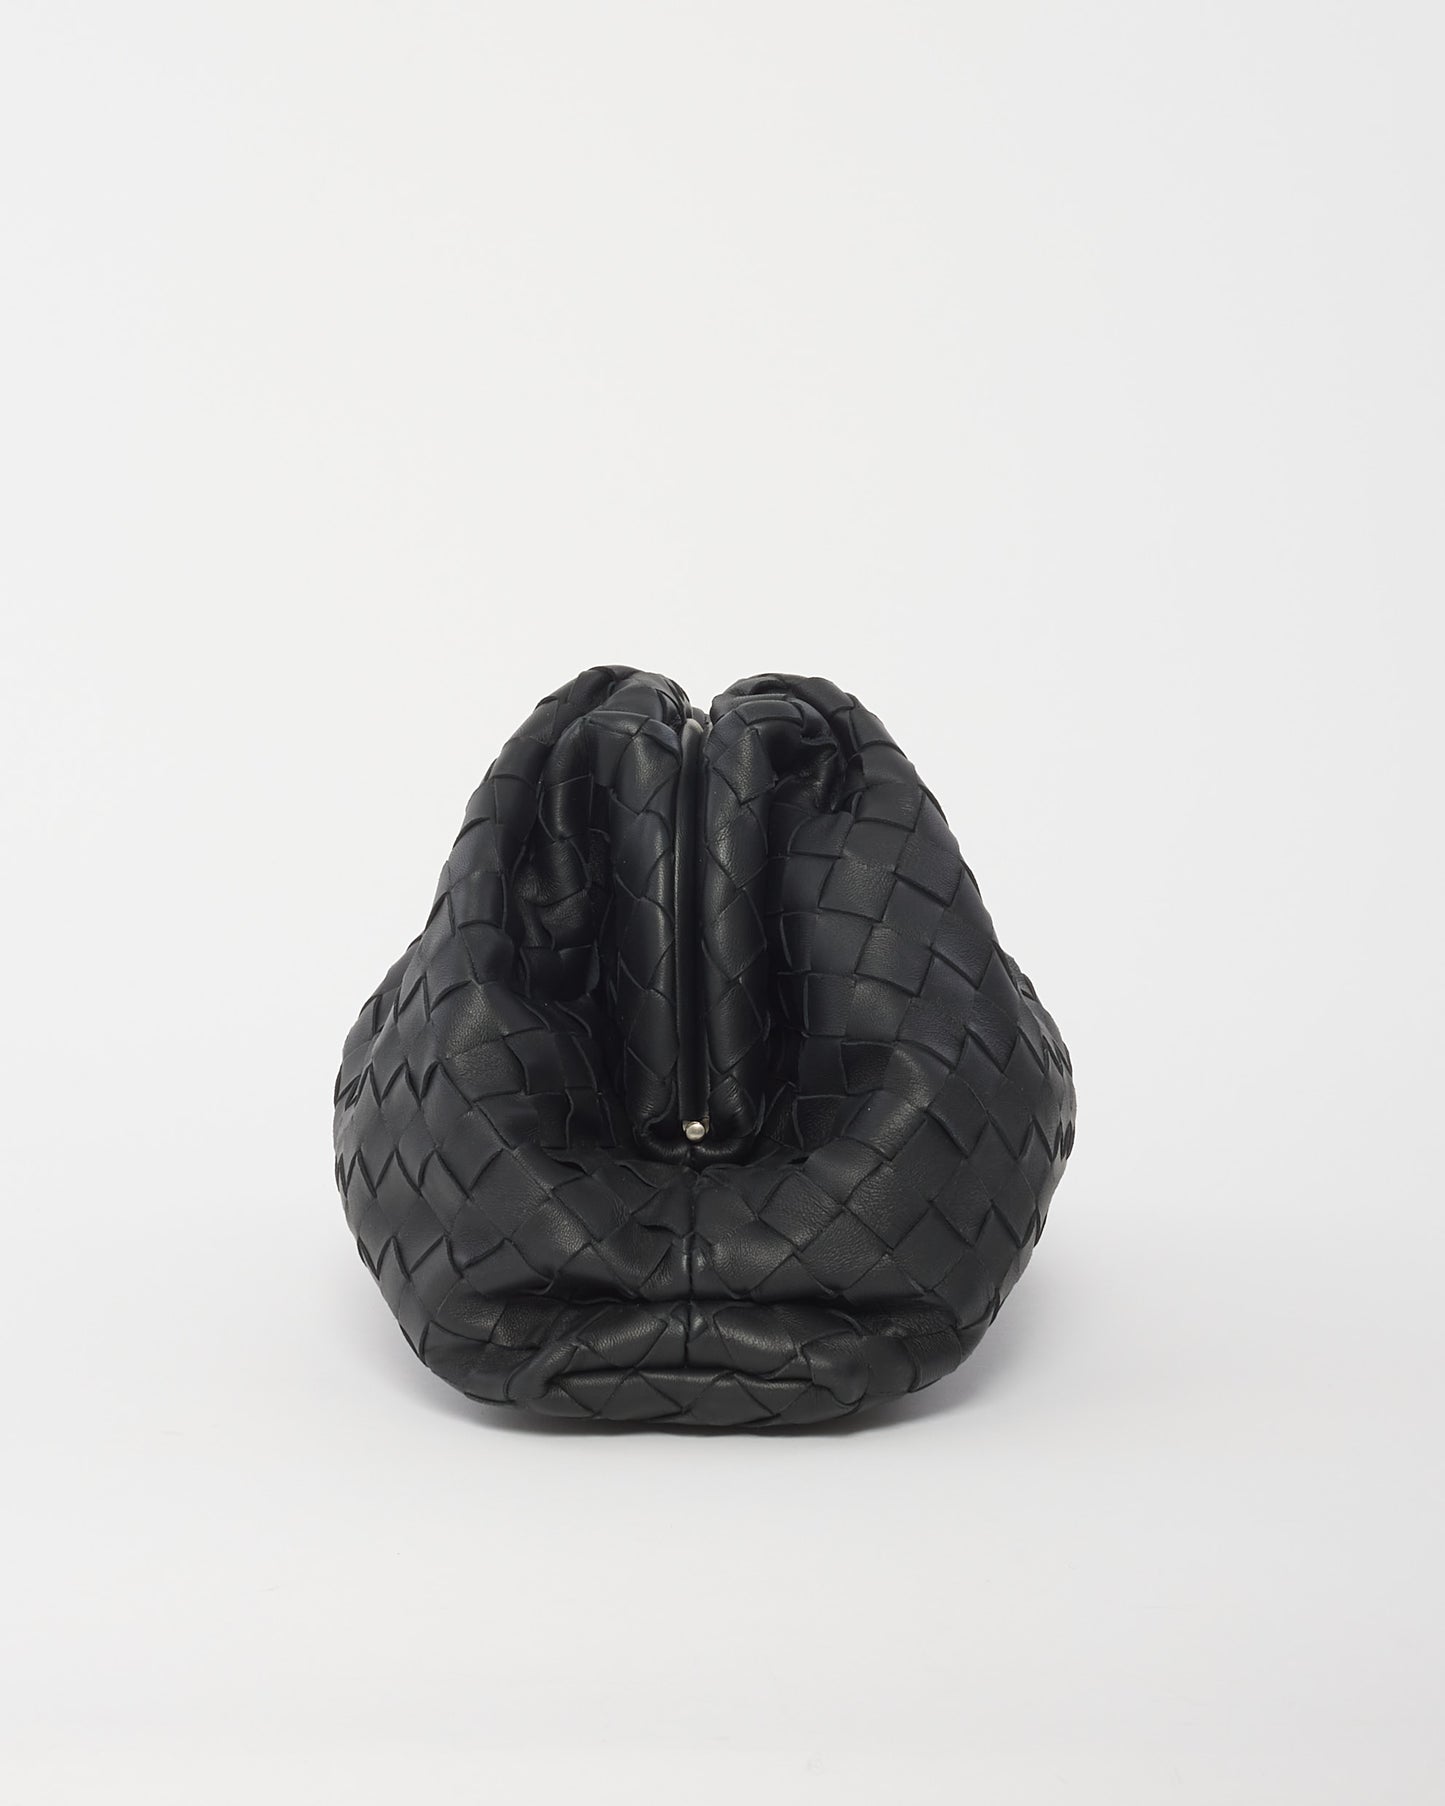 Bottega Veneta Black Intrecciato Leather Classic Pouch Clutch Bag